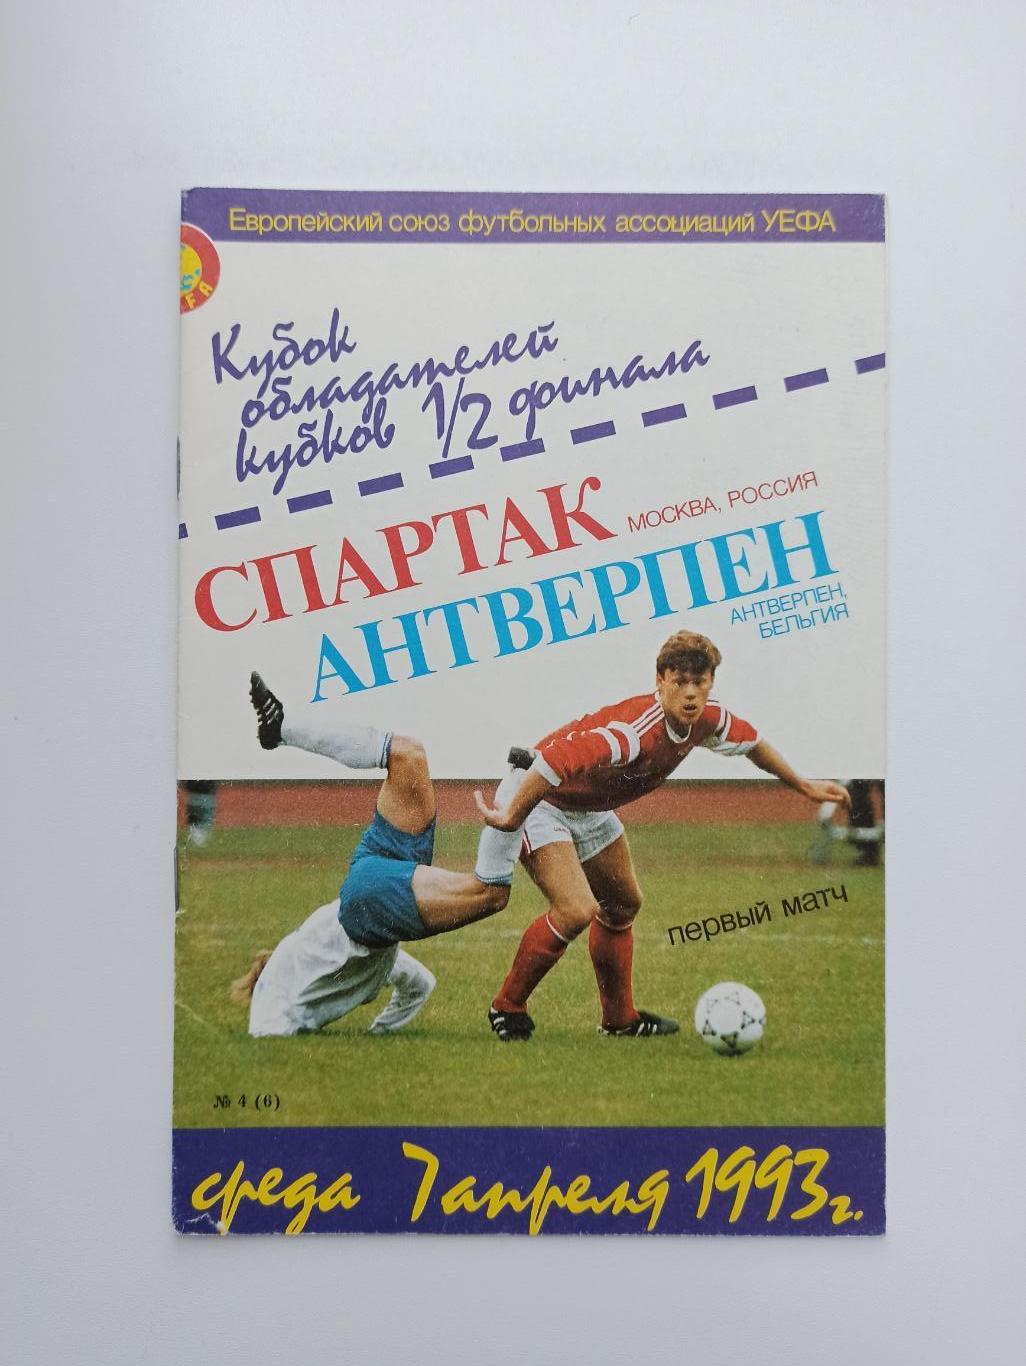 Распродажа, Еврокубки, Спартак (Москва) - Антверпен (Бельгия), 1993г., Фикс